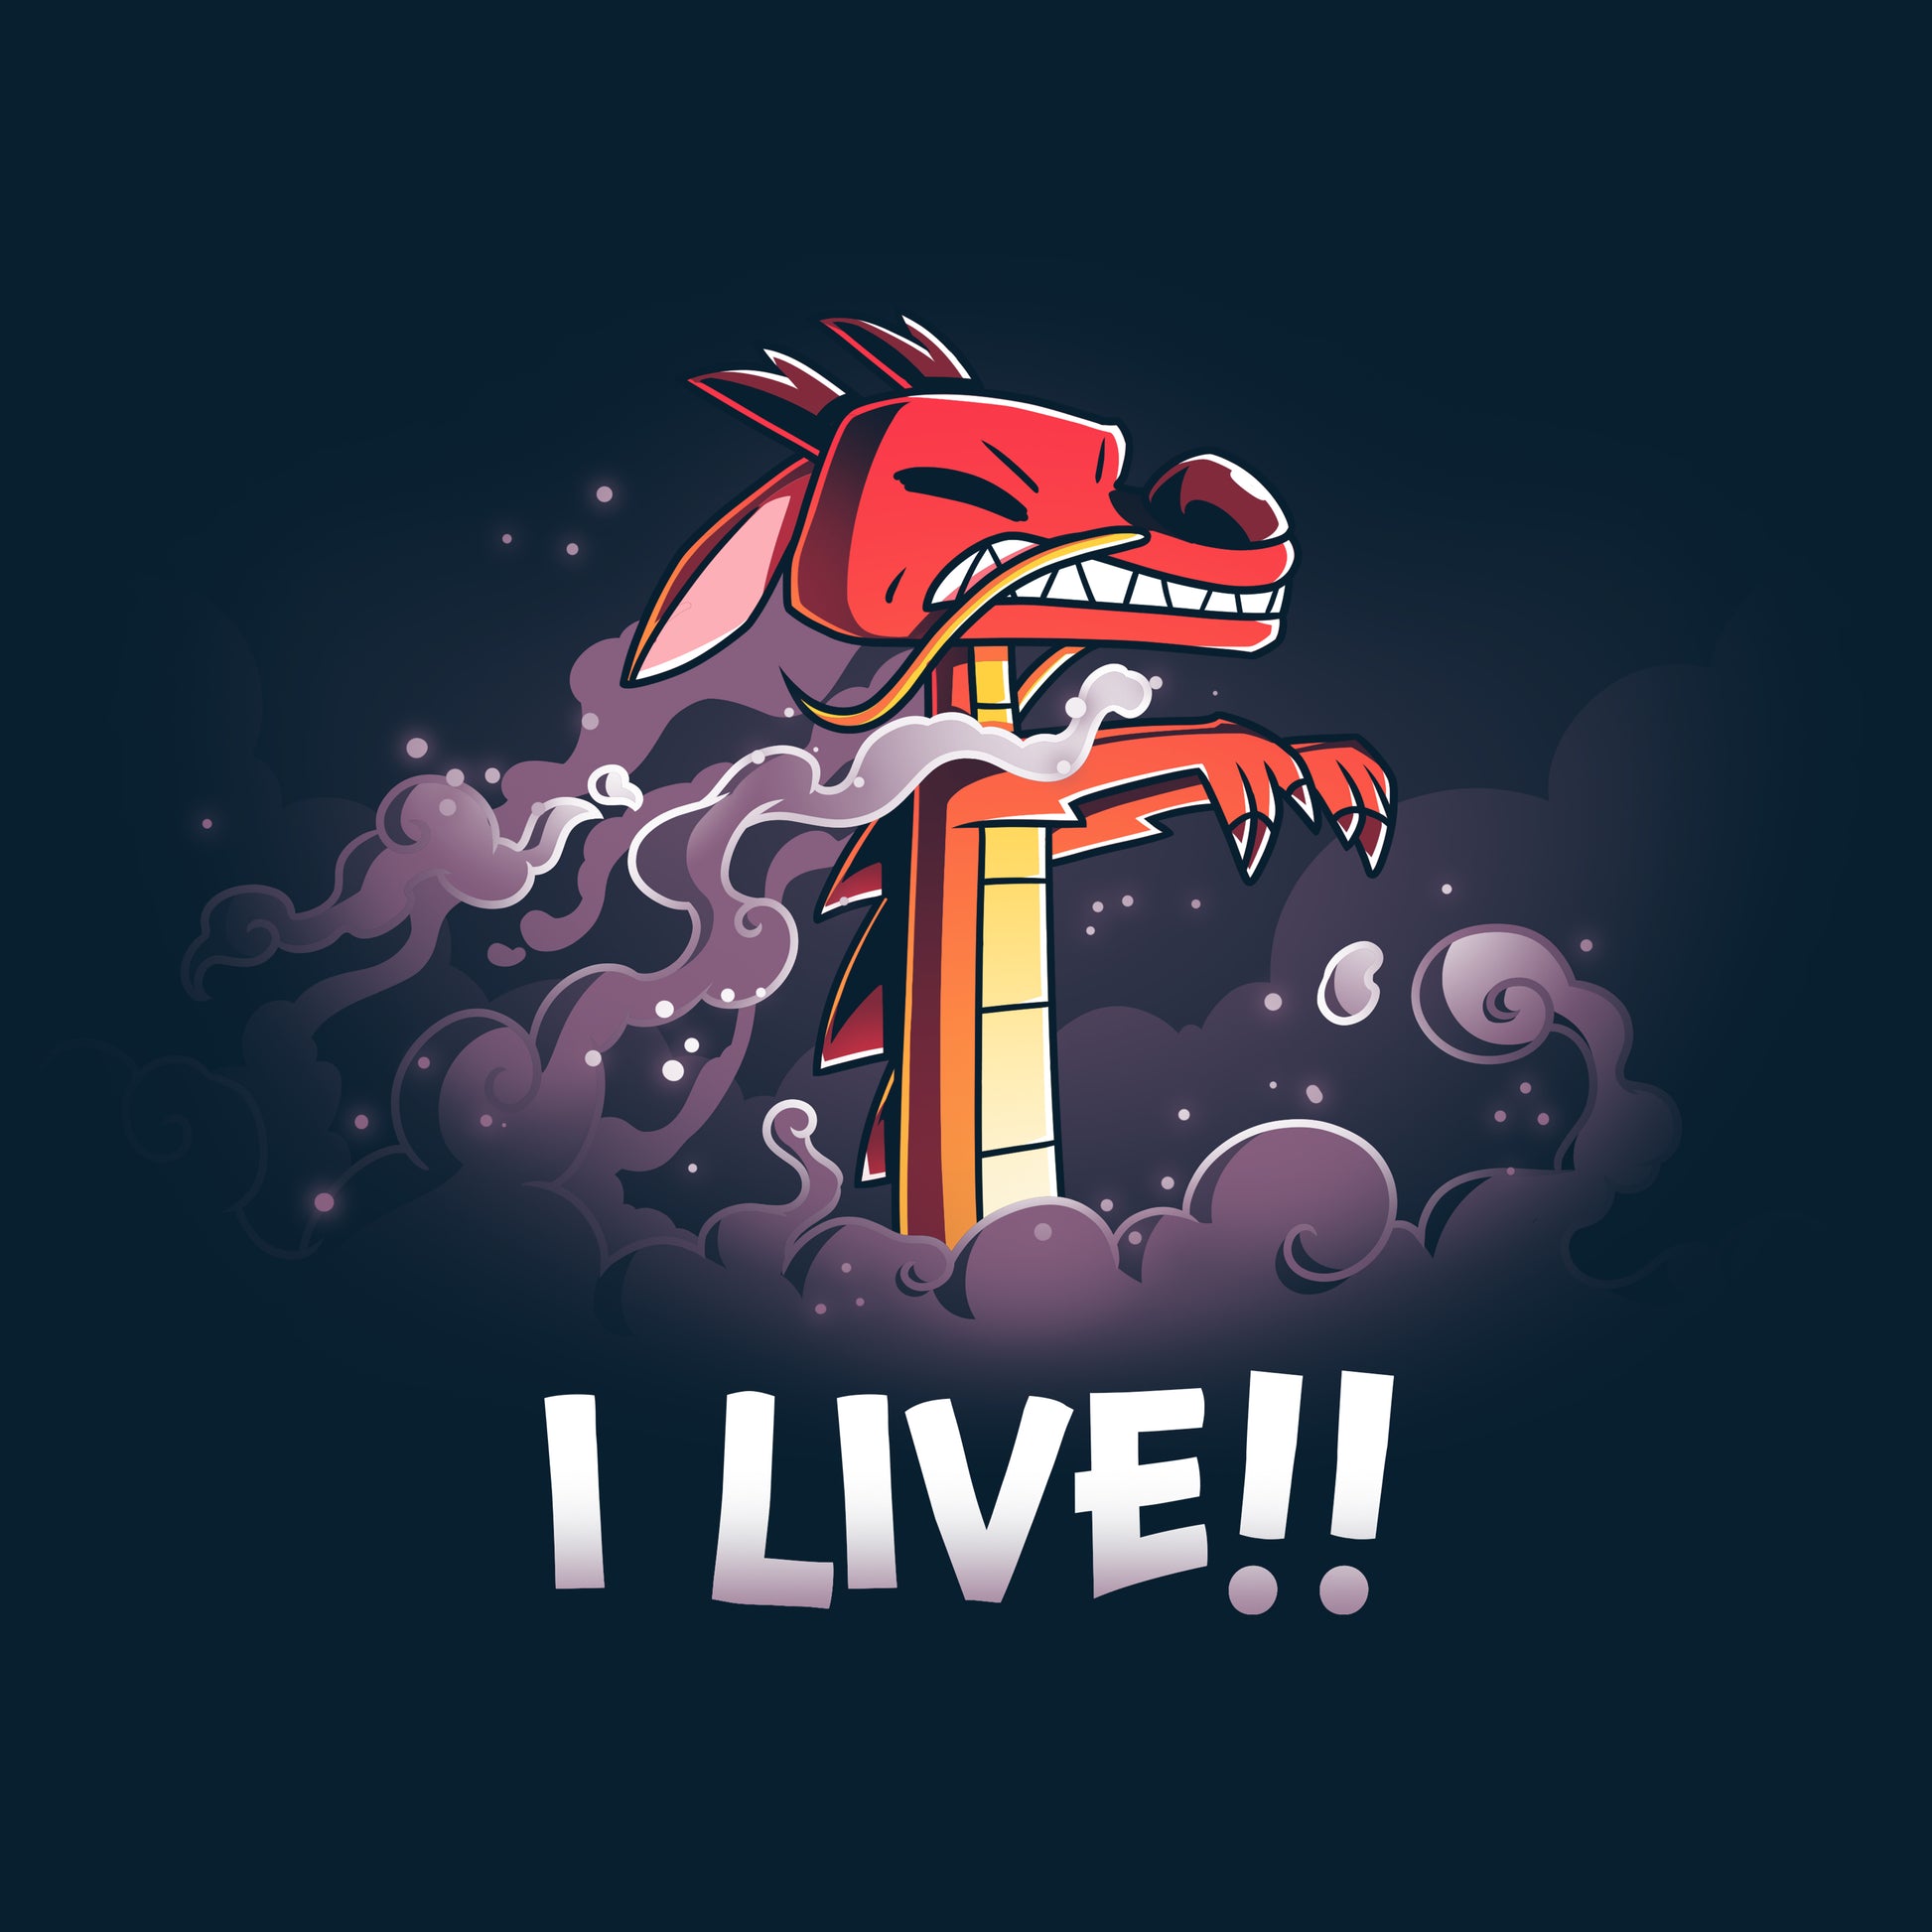 An I Live!!-themed Disney T-shirt featuring a cartoon dragon.